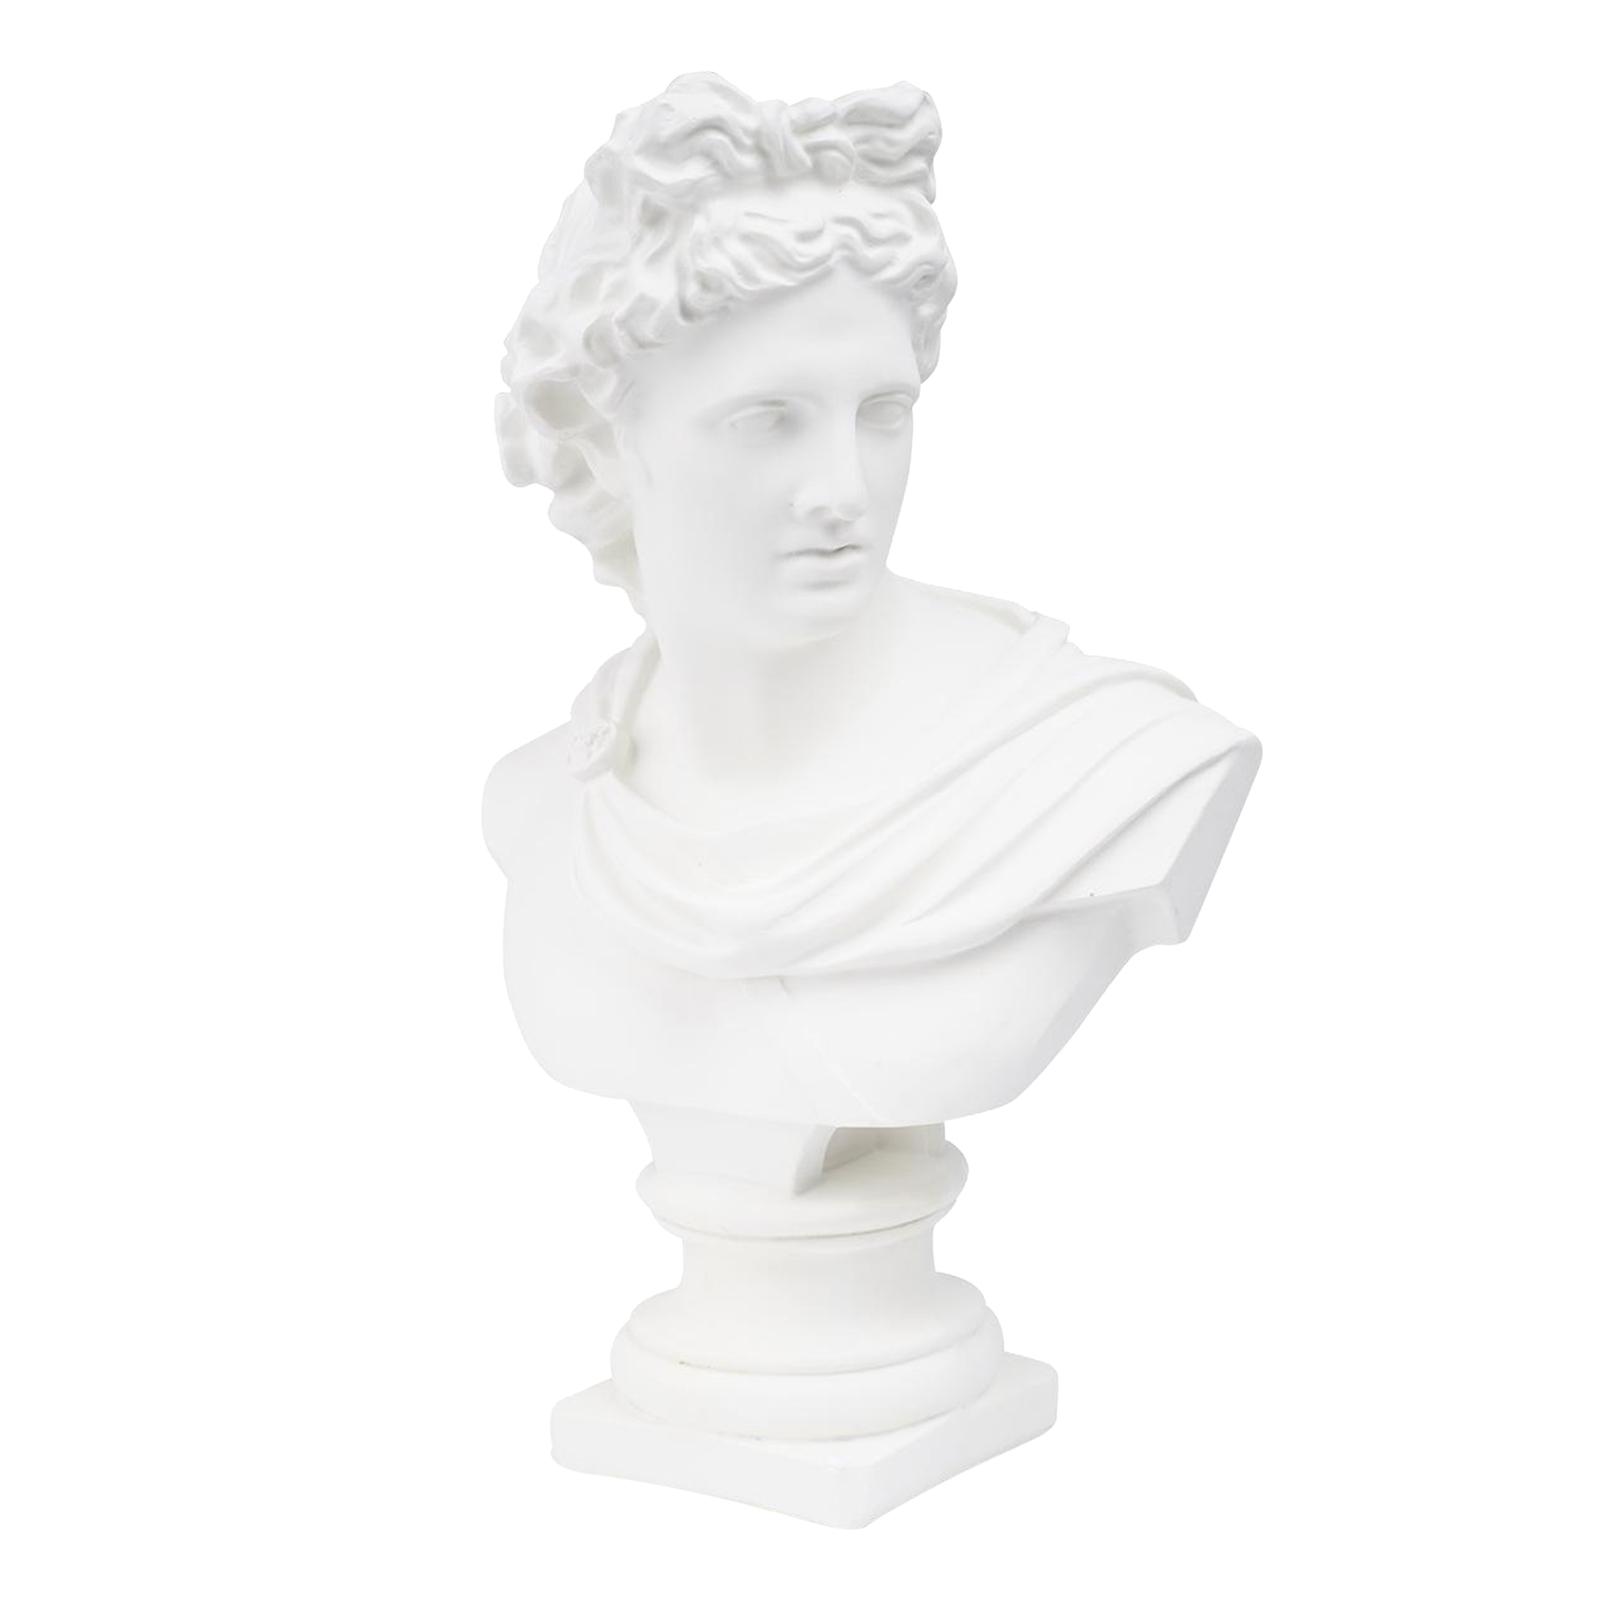 11.8'' Apollo Bust Statue Replica Portraits Sculpture Handicraft Collection